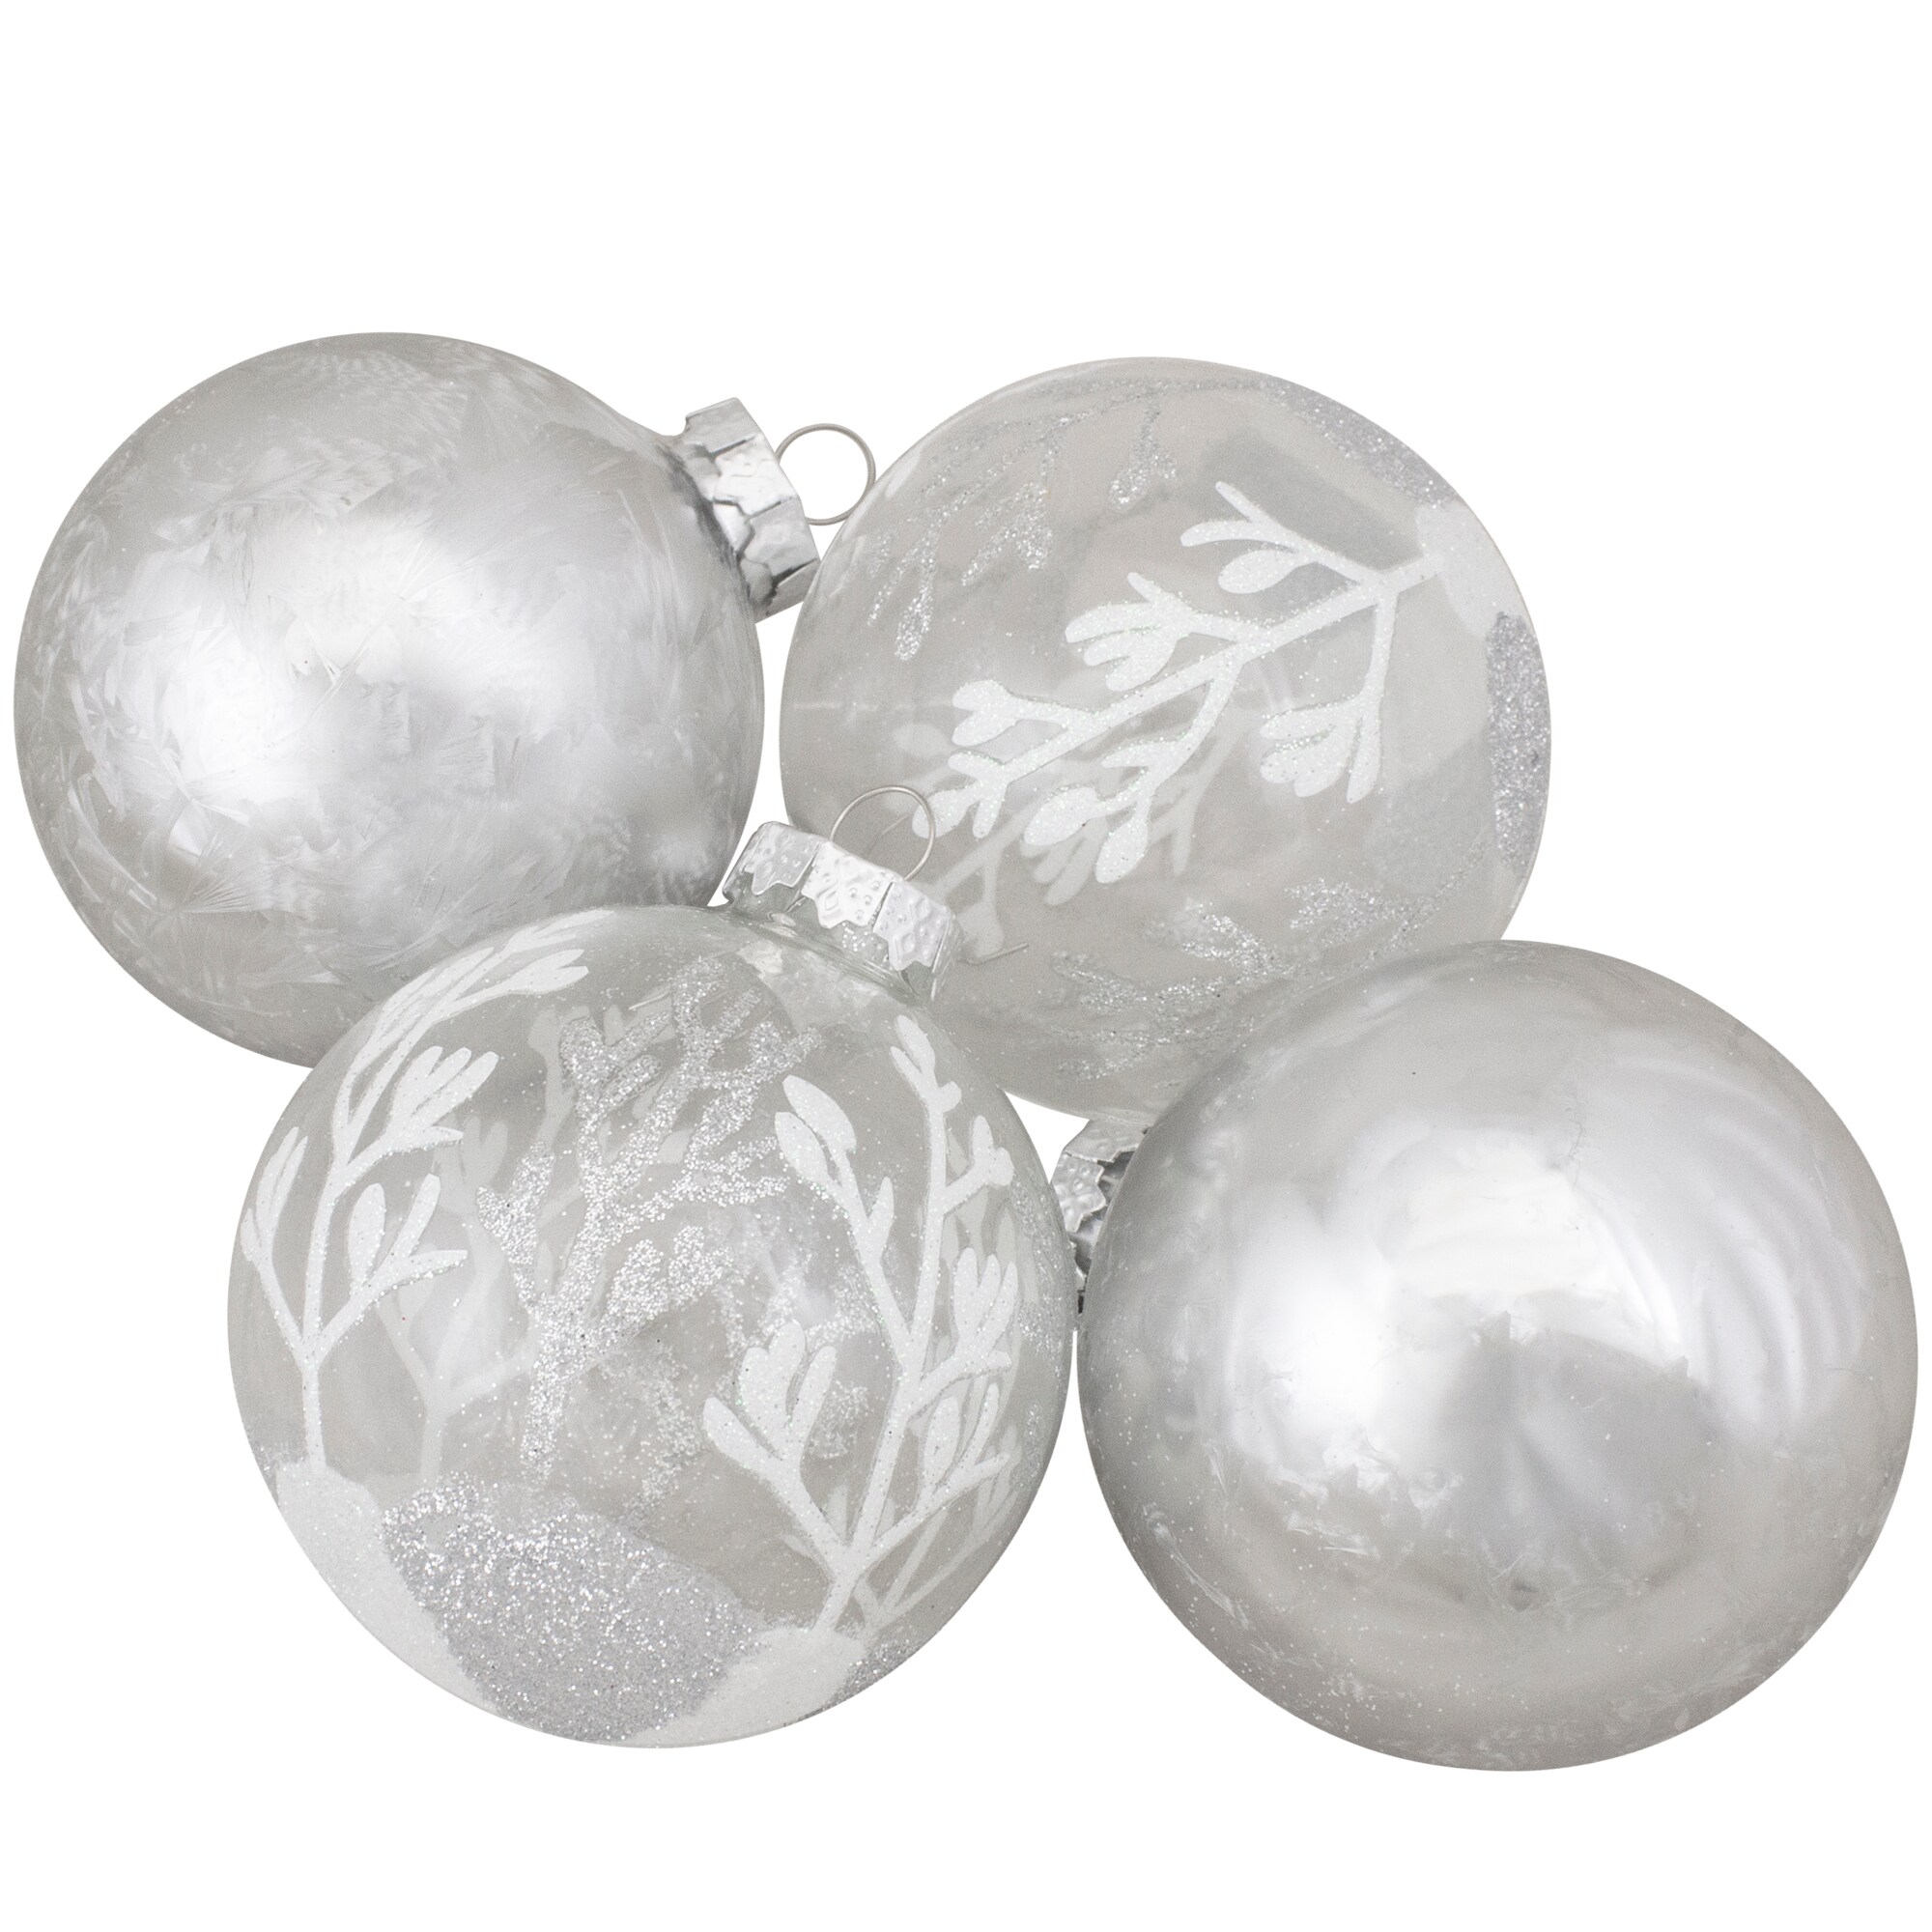 Glass Ball Ornaments 3 Pc Set Silver Gray Hand Painted White Glitter Flower Bird 